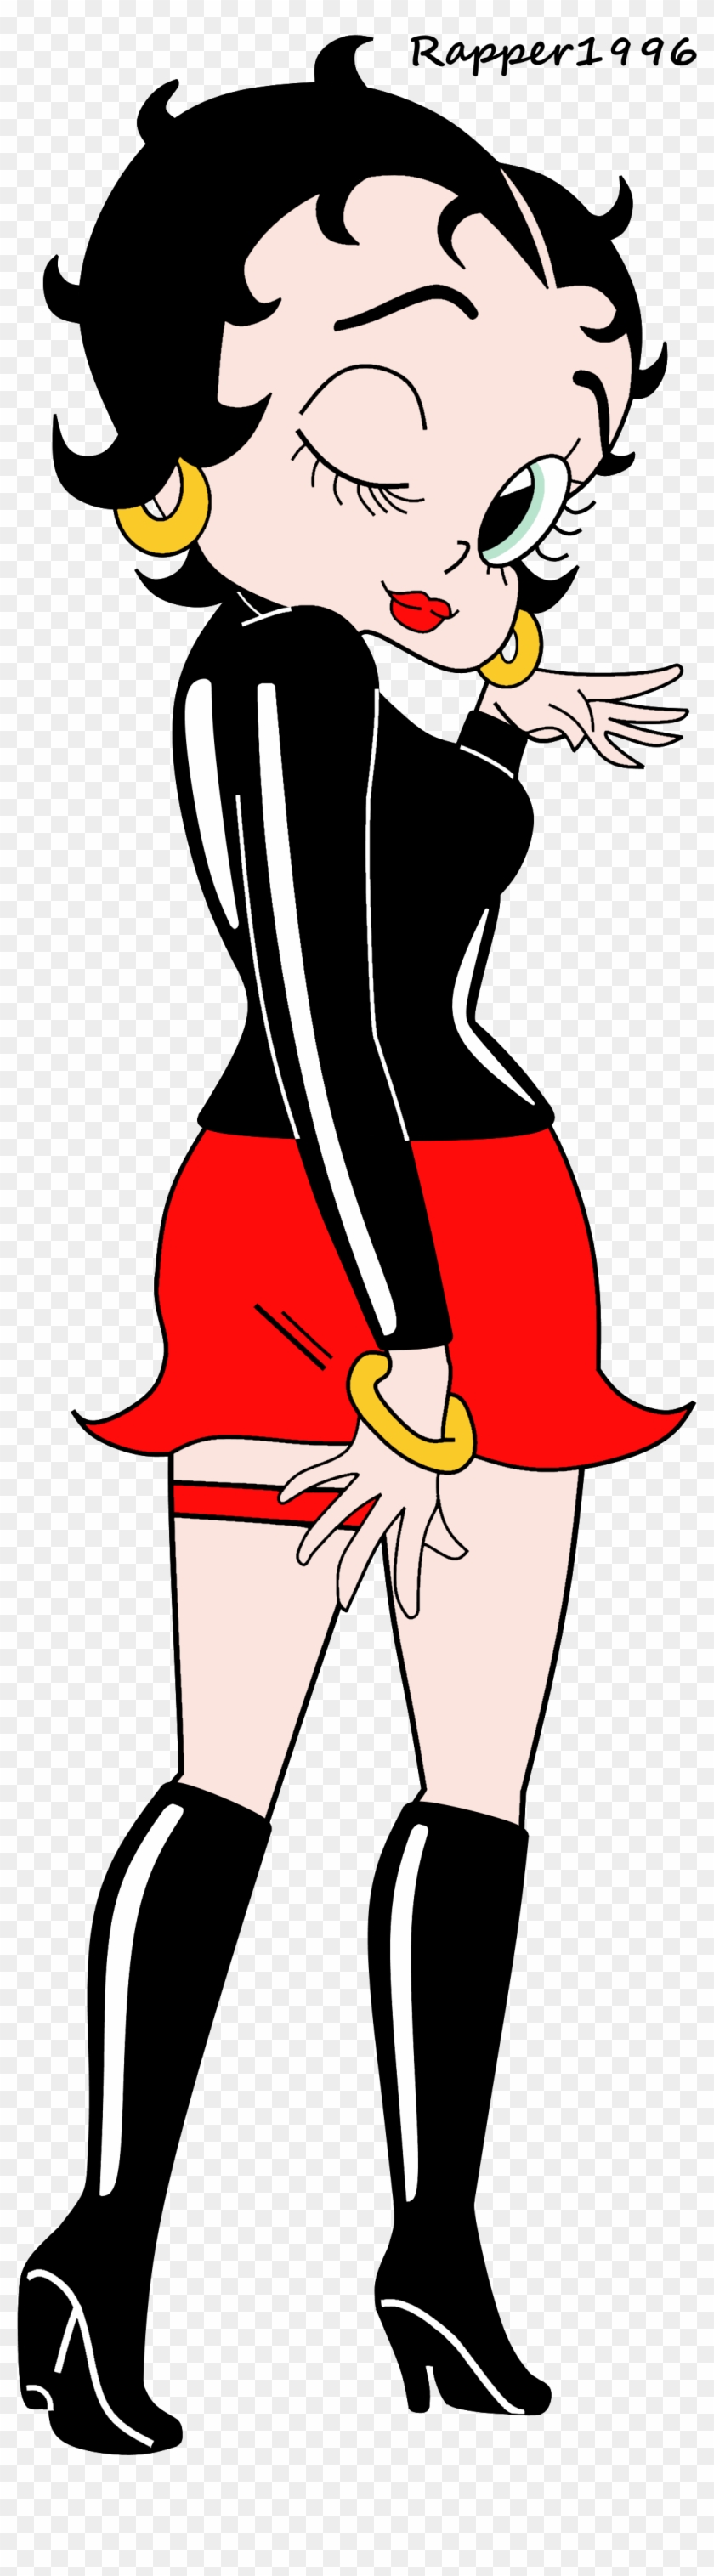 Betty Boop Anime Biker Render By Rapper1996 - Betty Boop Render #517610